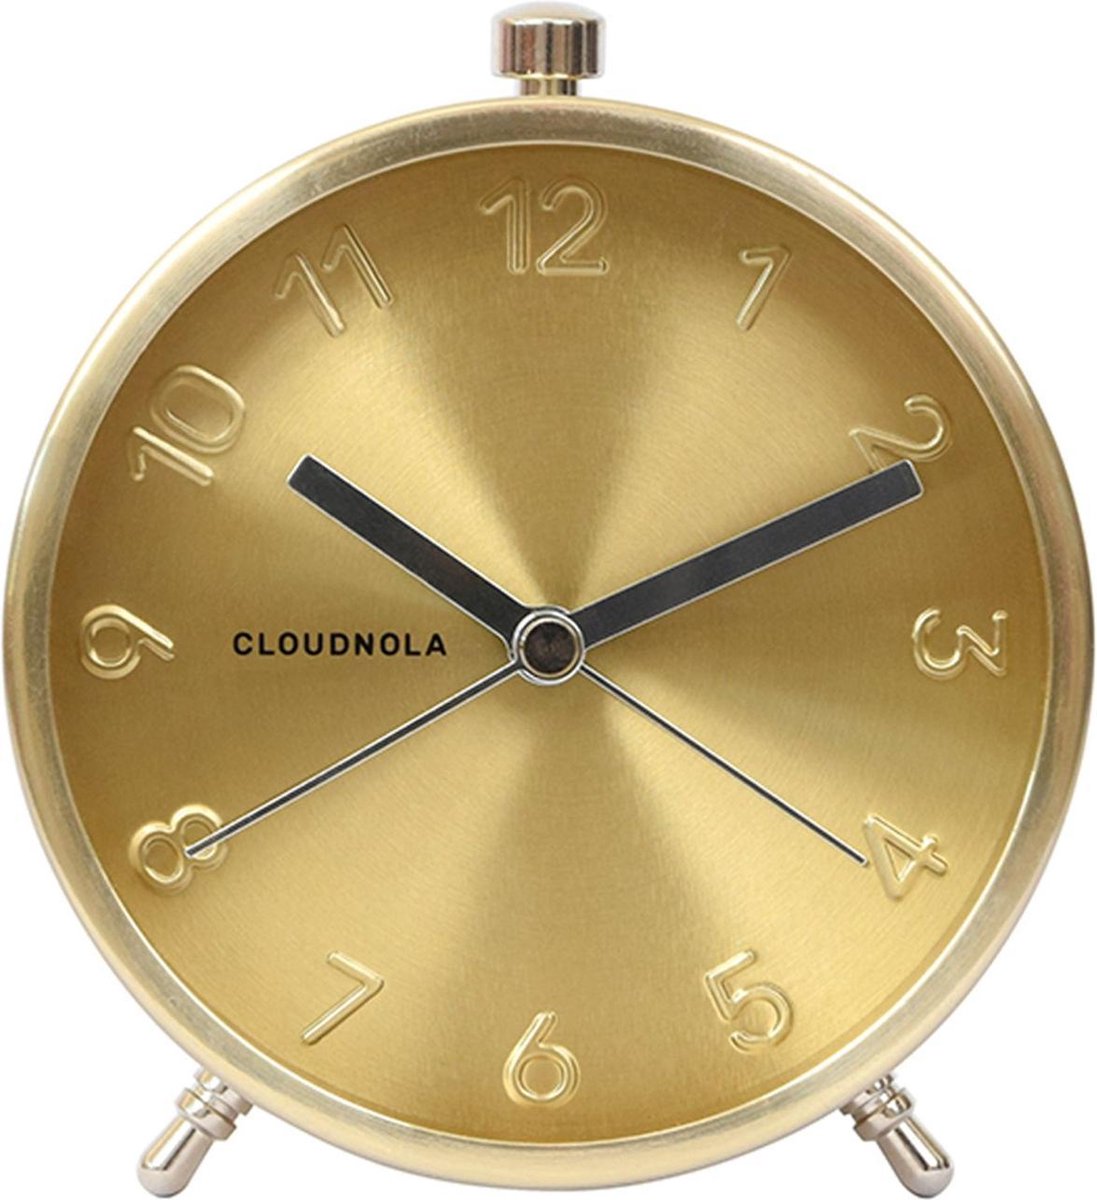 Cloudnola - Glam Gouden Wekker - Artistiek Design - Bureauklok - Alarm